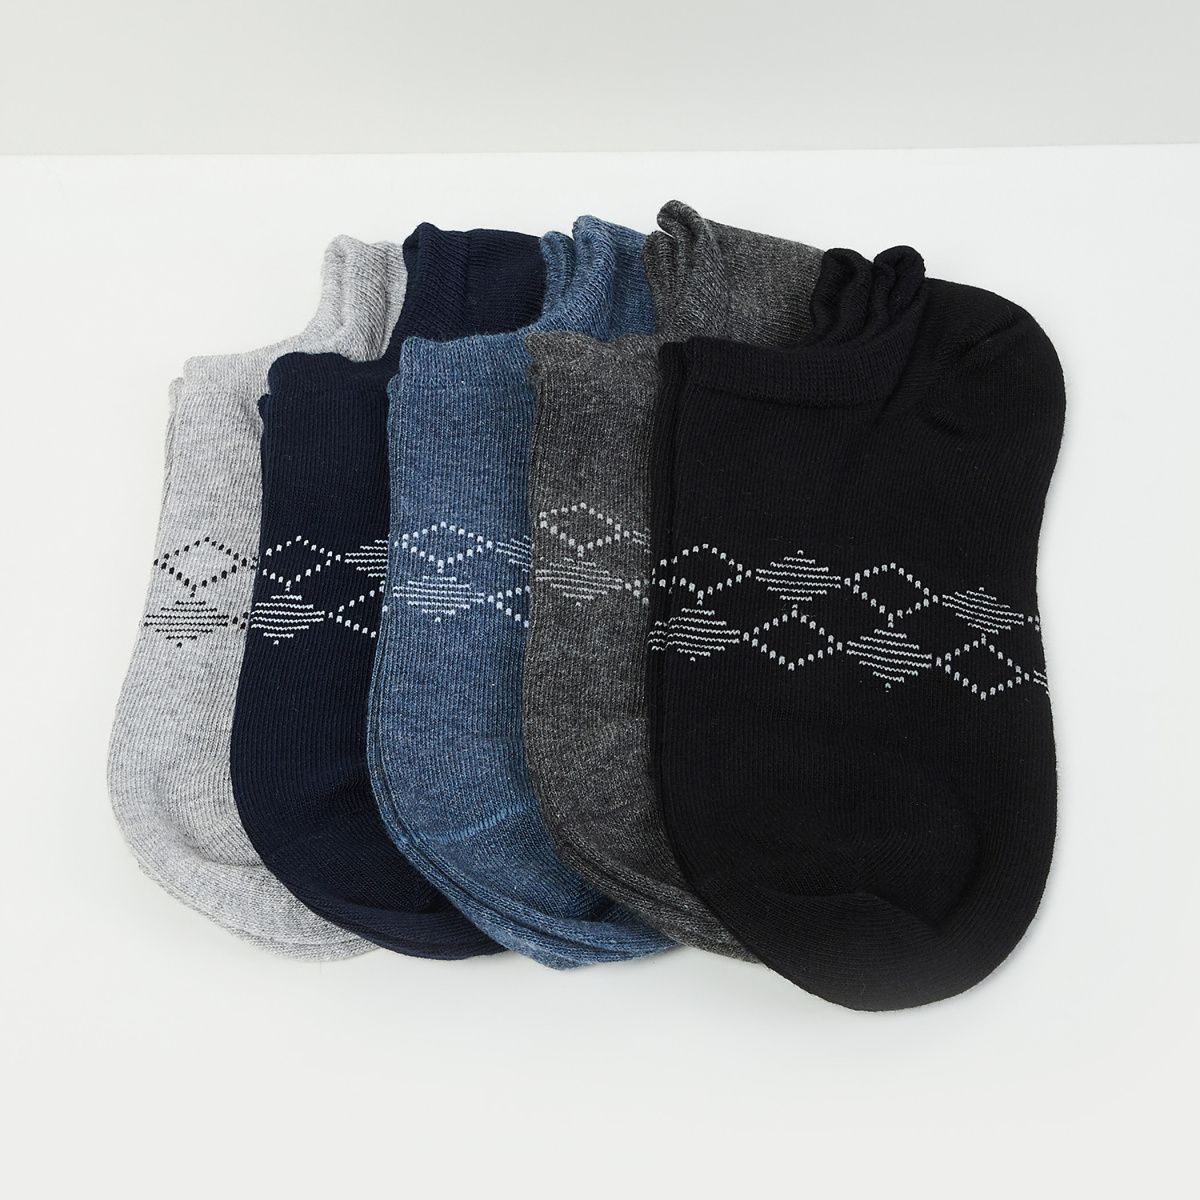 MAX Woven Design Socks- Set of 5